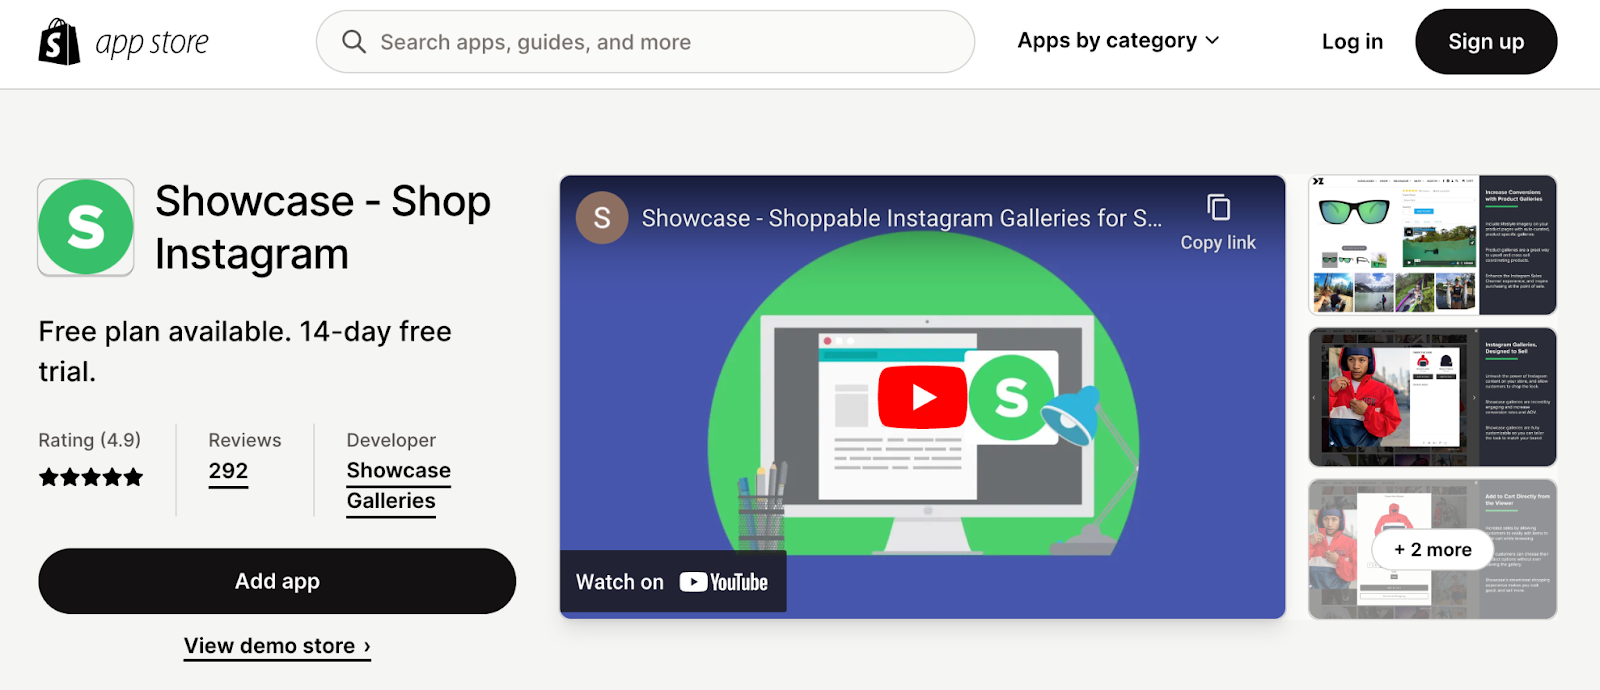 best shopify apps for instagram - Showcase - Shop Instagram